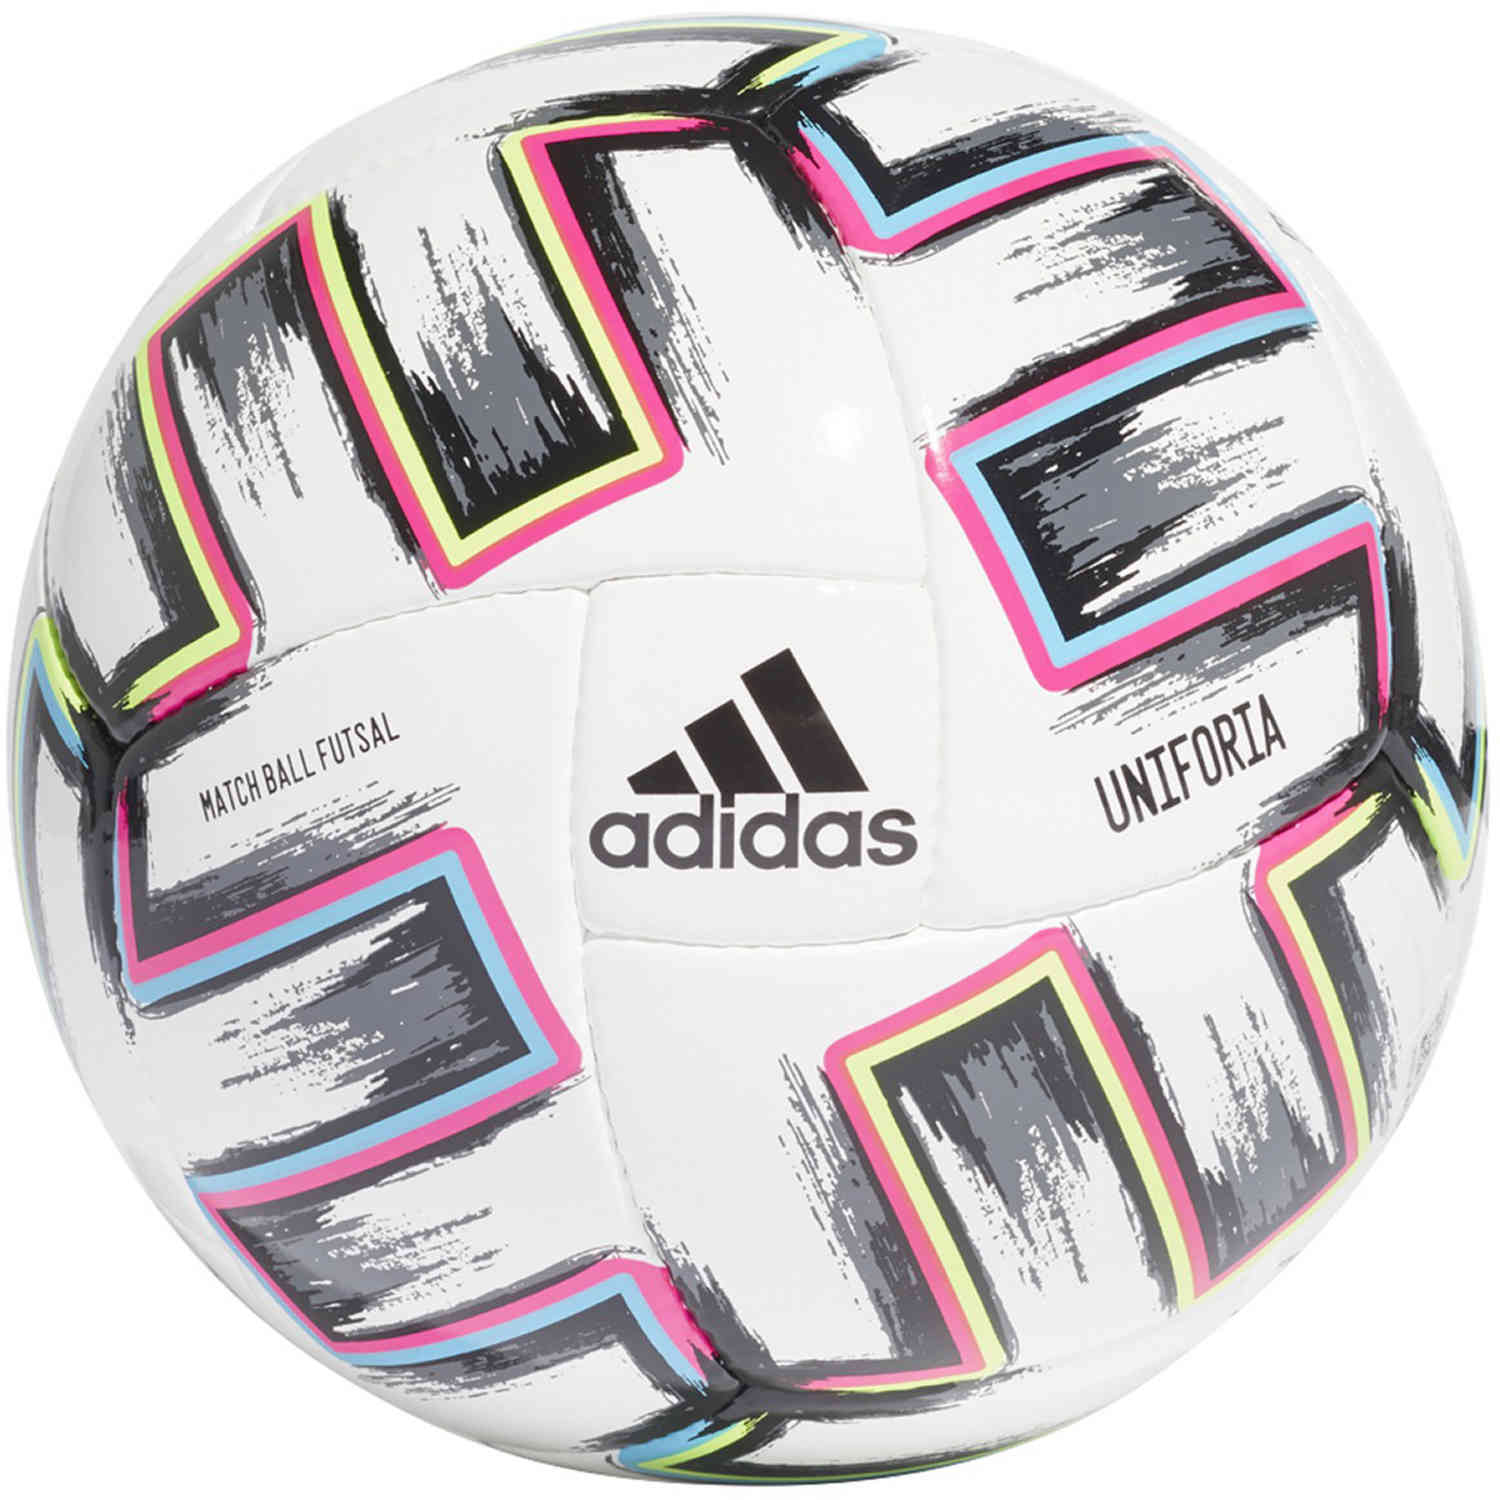 adidas uniforia official match ball